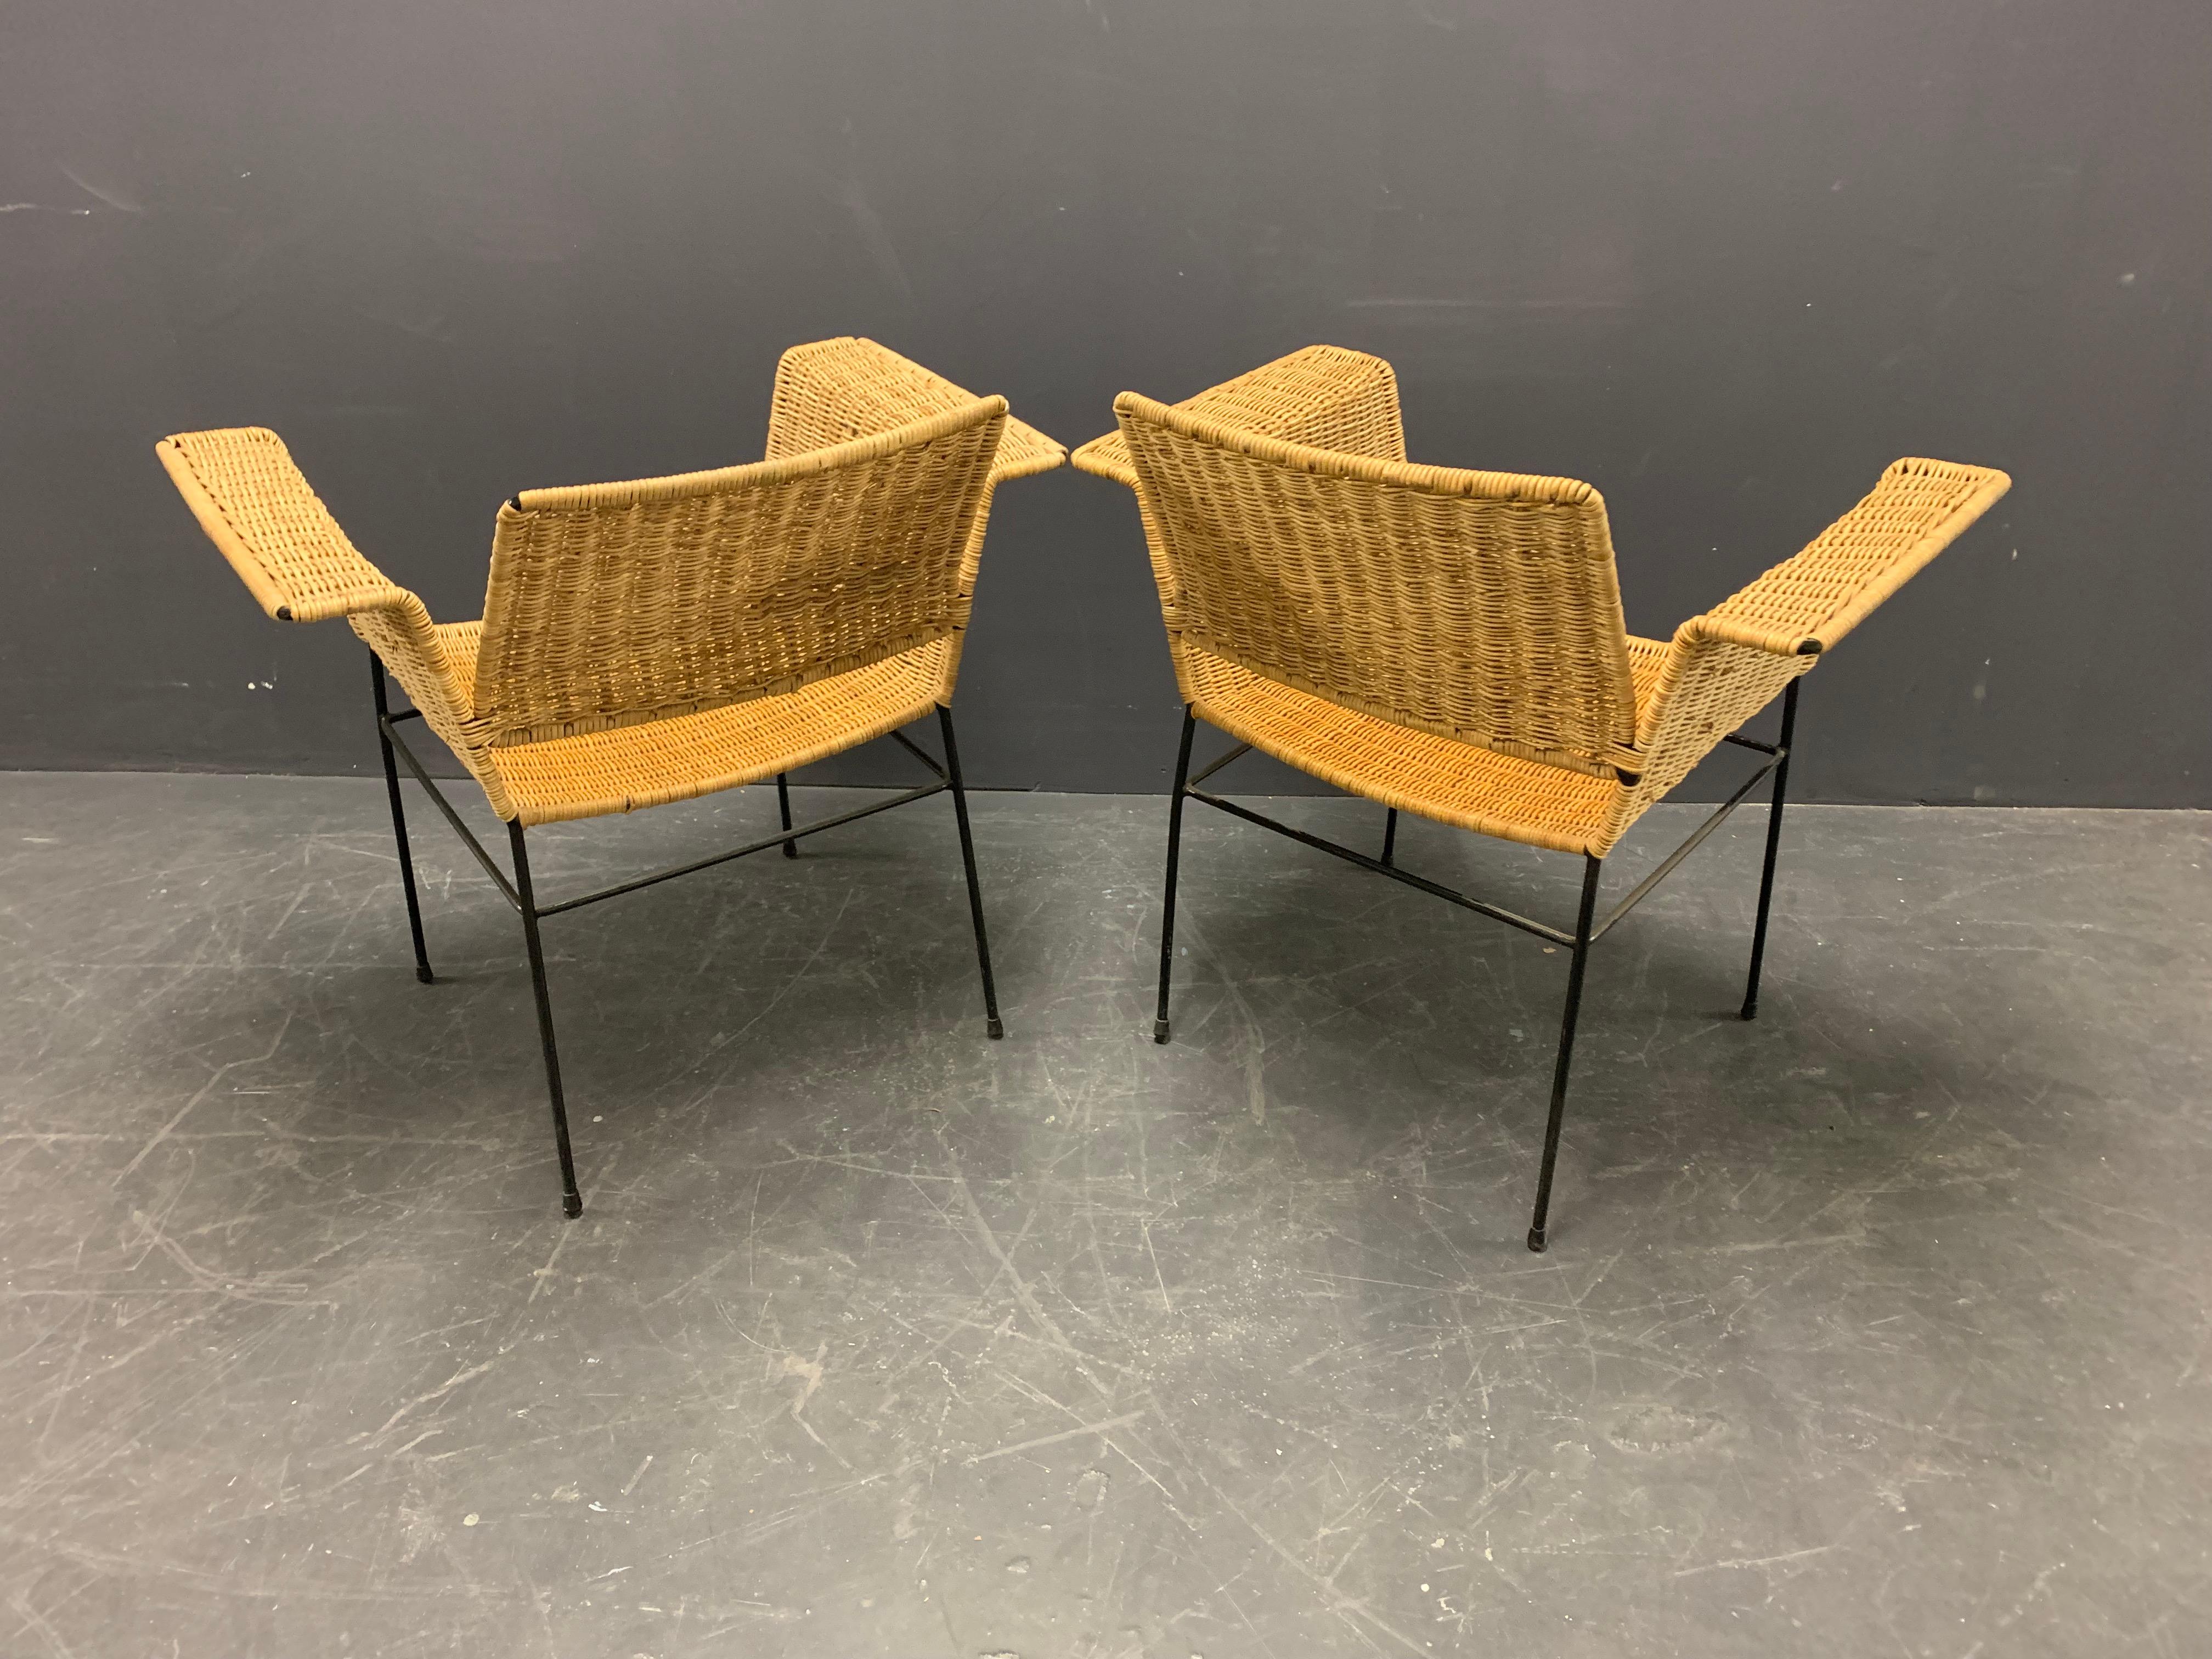 Set of Two Wonderful Cane/Iron Chairs by Herta-Maria Witzemann 1